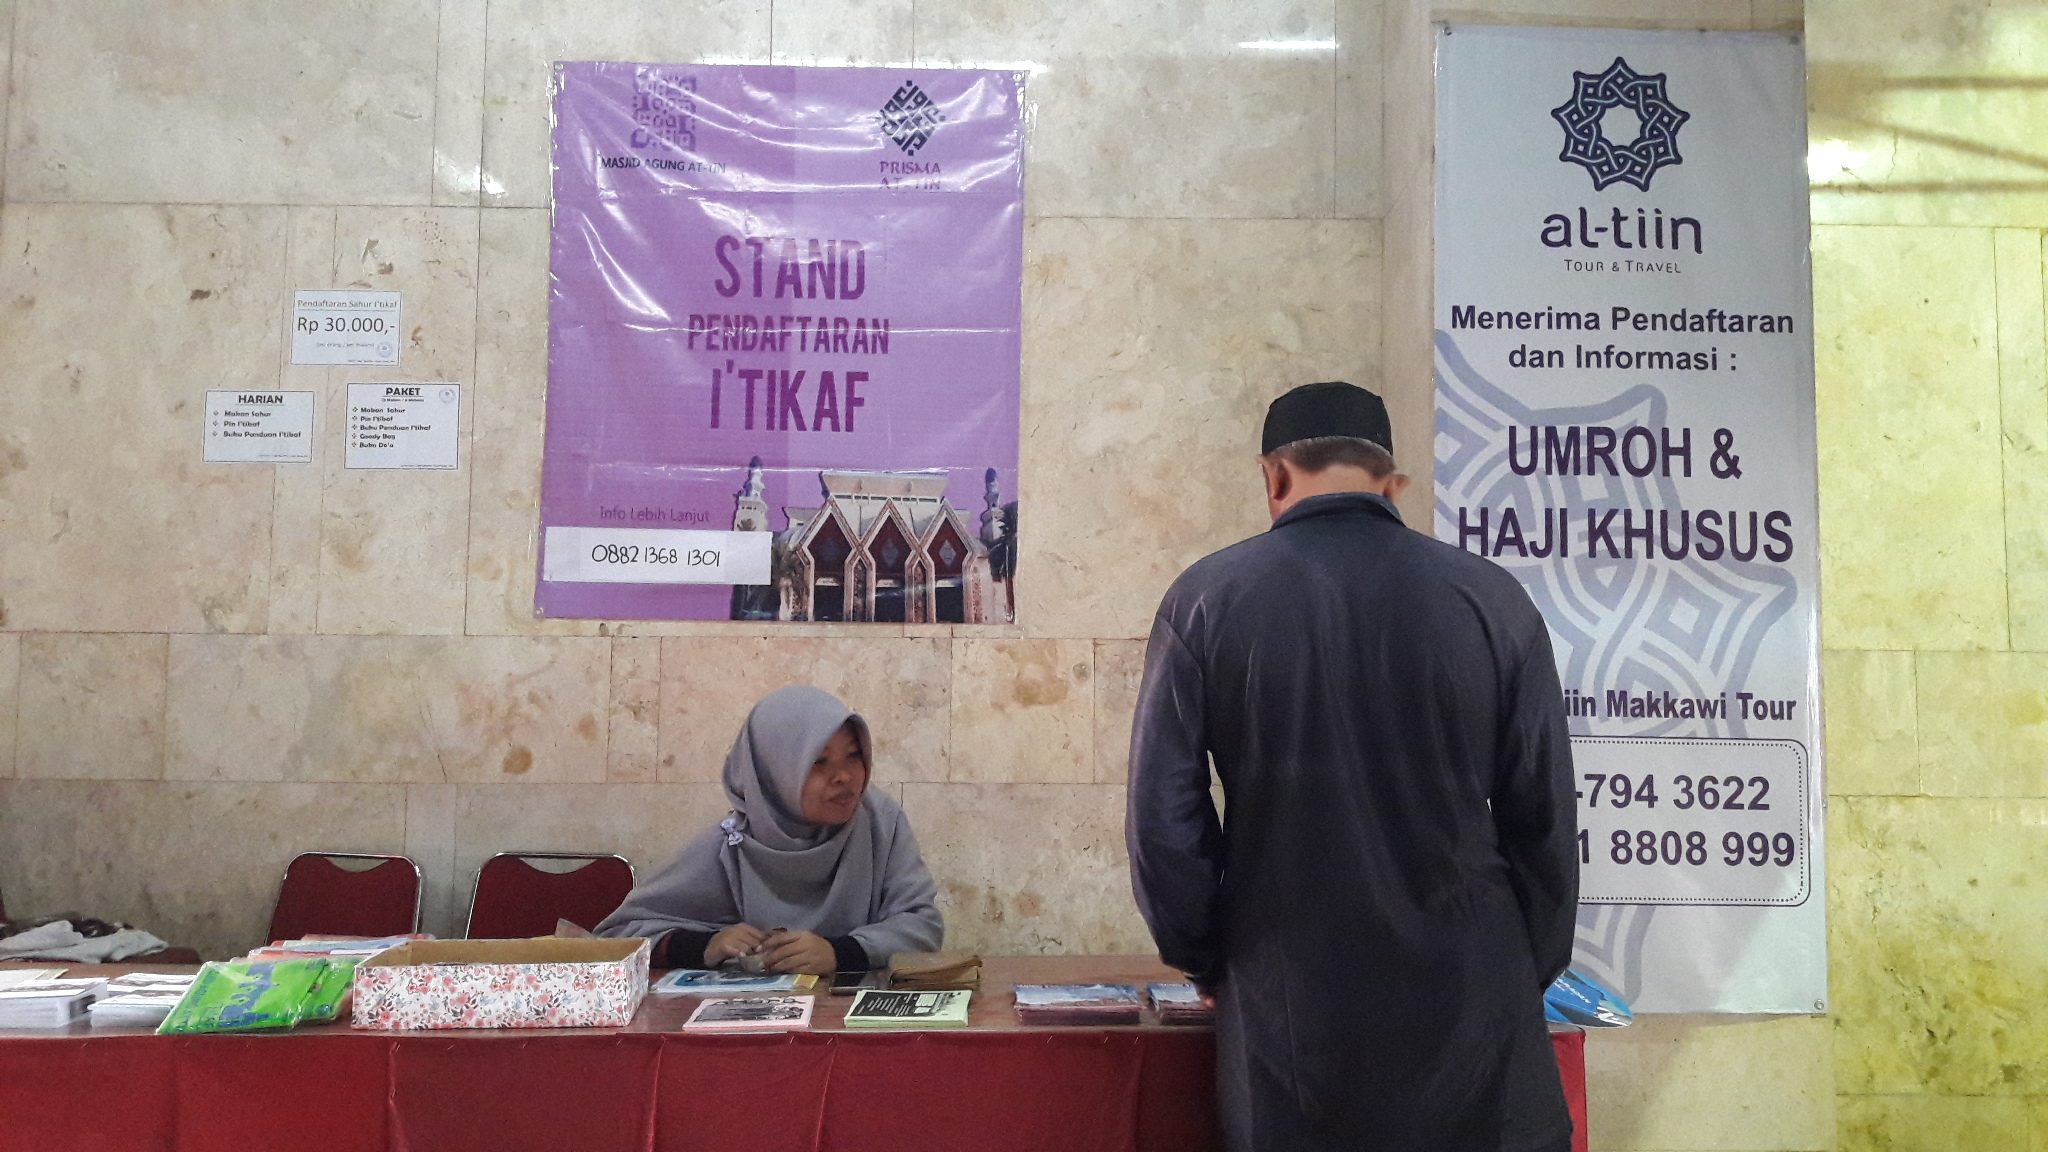 'Stand' pendaftaran 'itikaf'. Foto oleh Sakinah Ummu Haniy/Rappler.com 